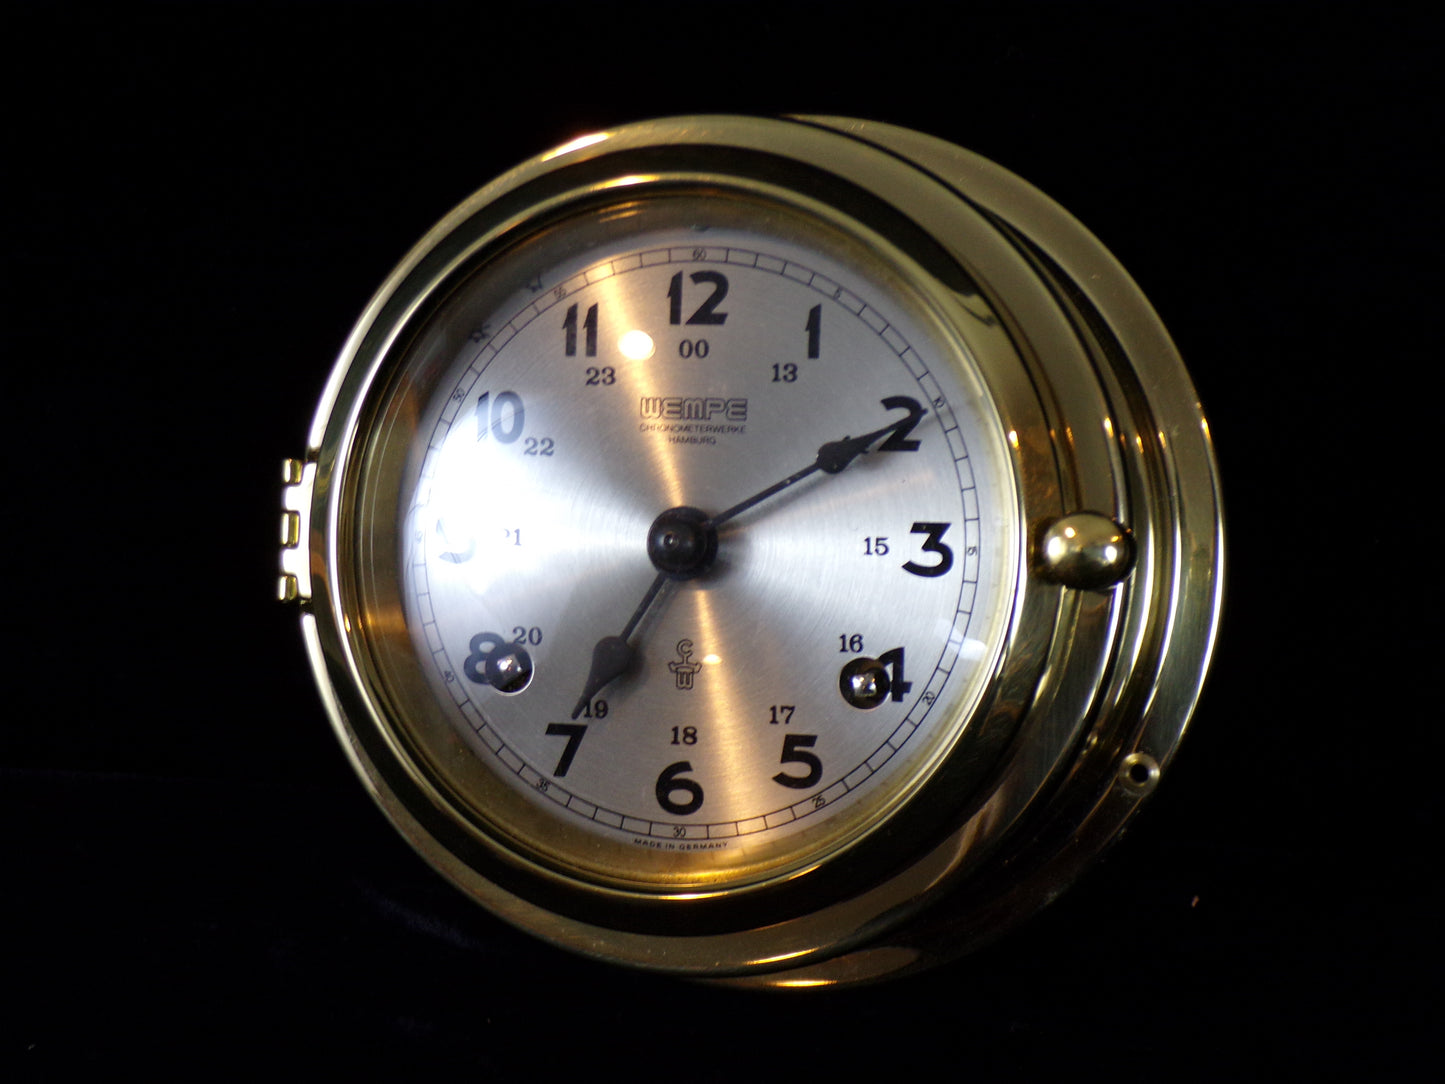 Wempe Ship's Bell Clock - Rare!